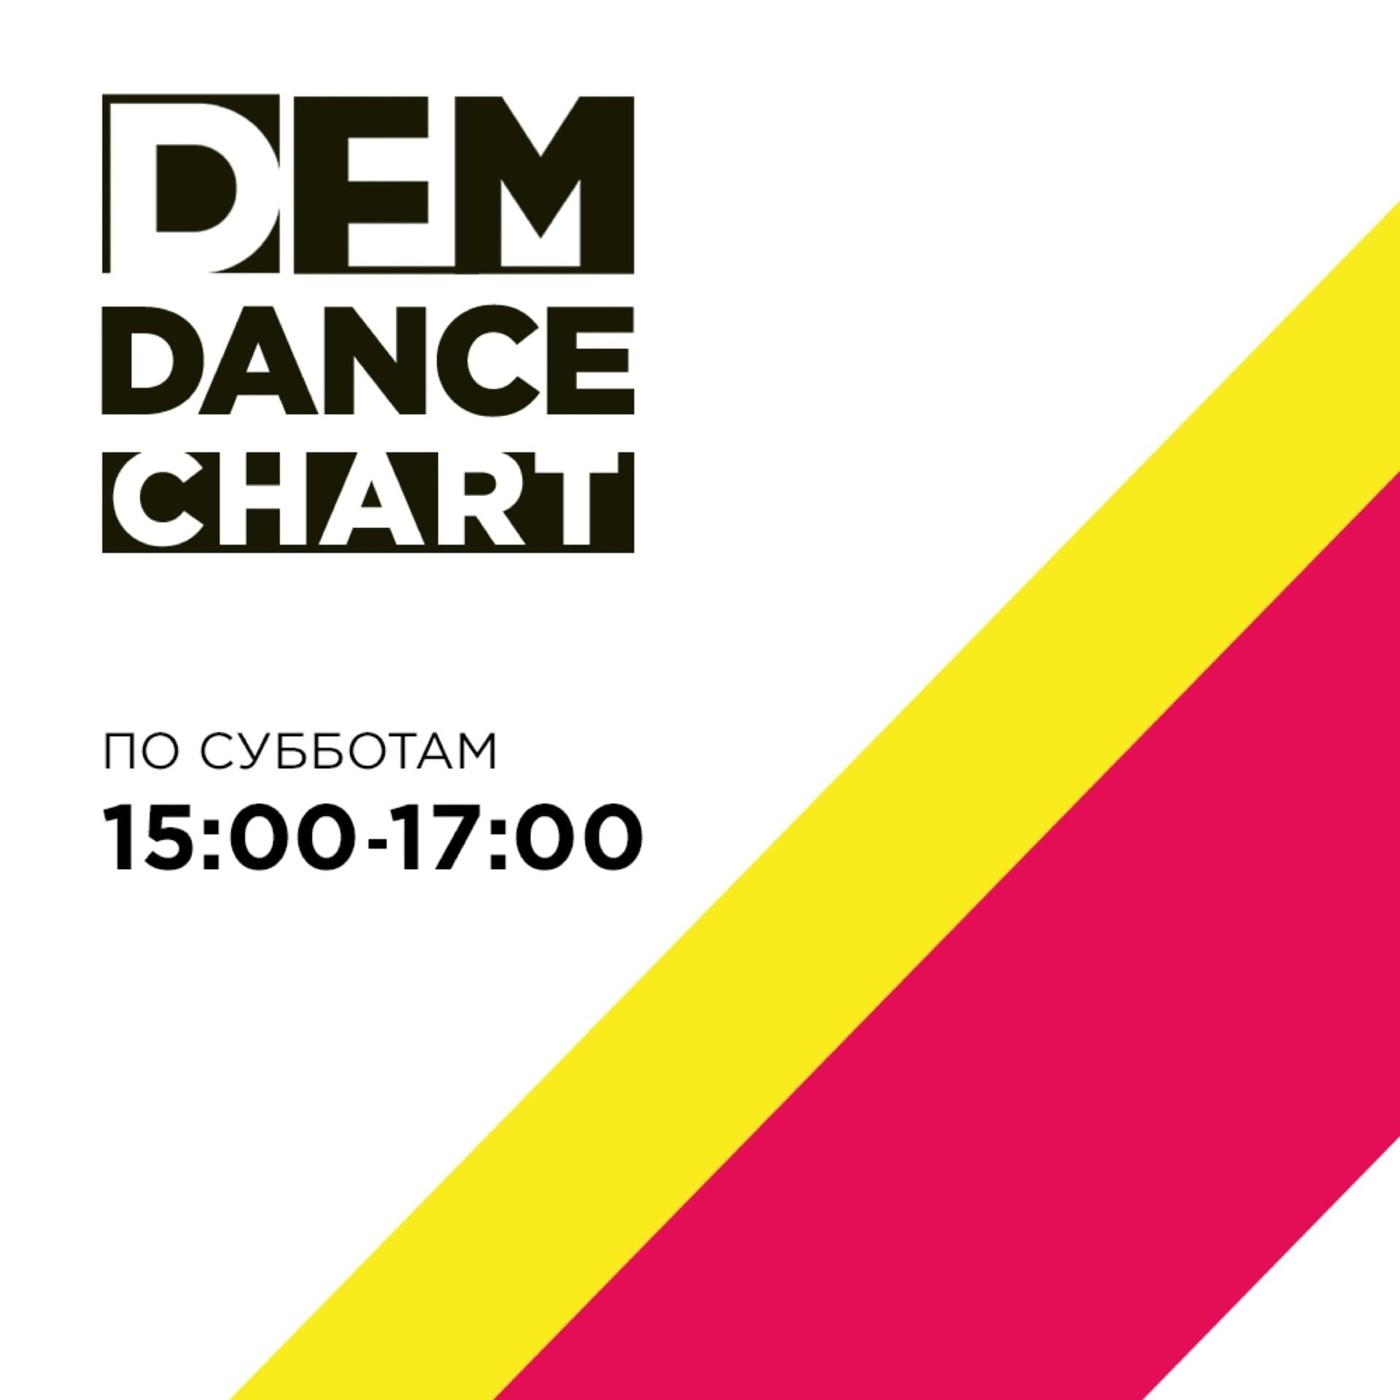 DFM DANCE CHART on DFM (2022-11-26) #4